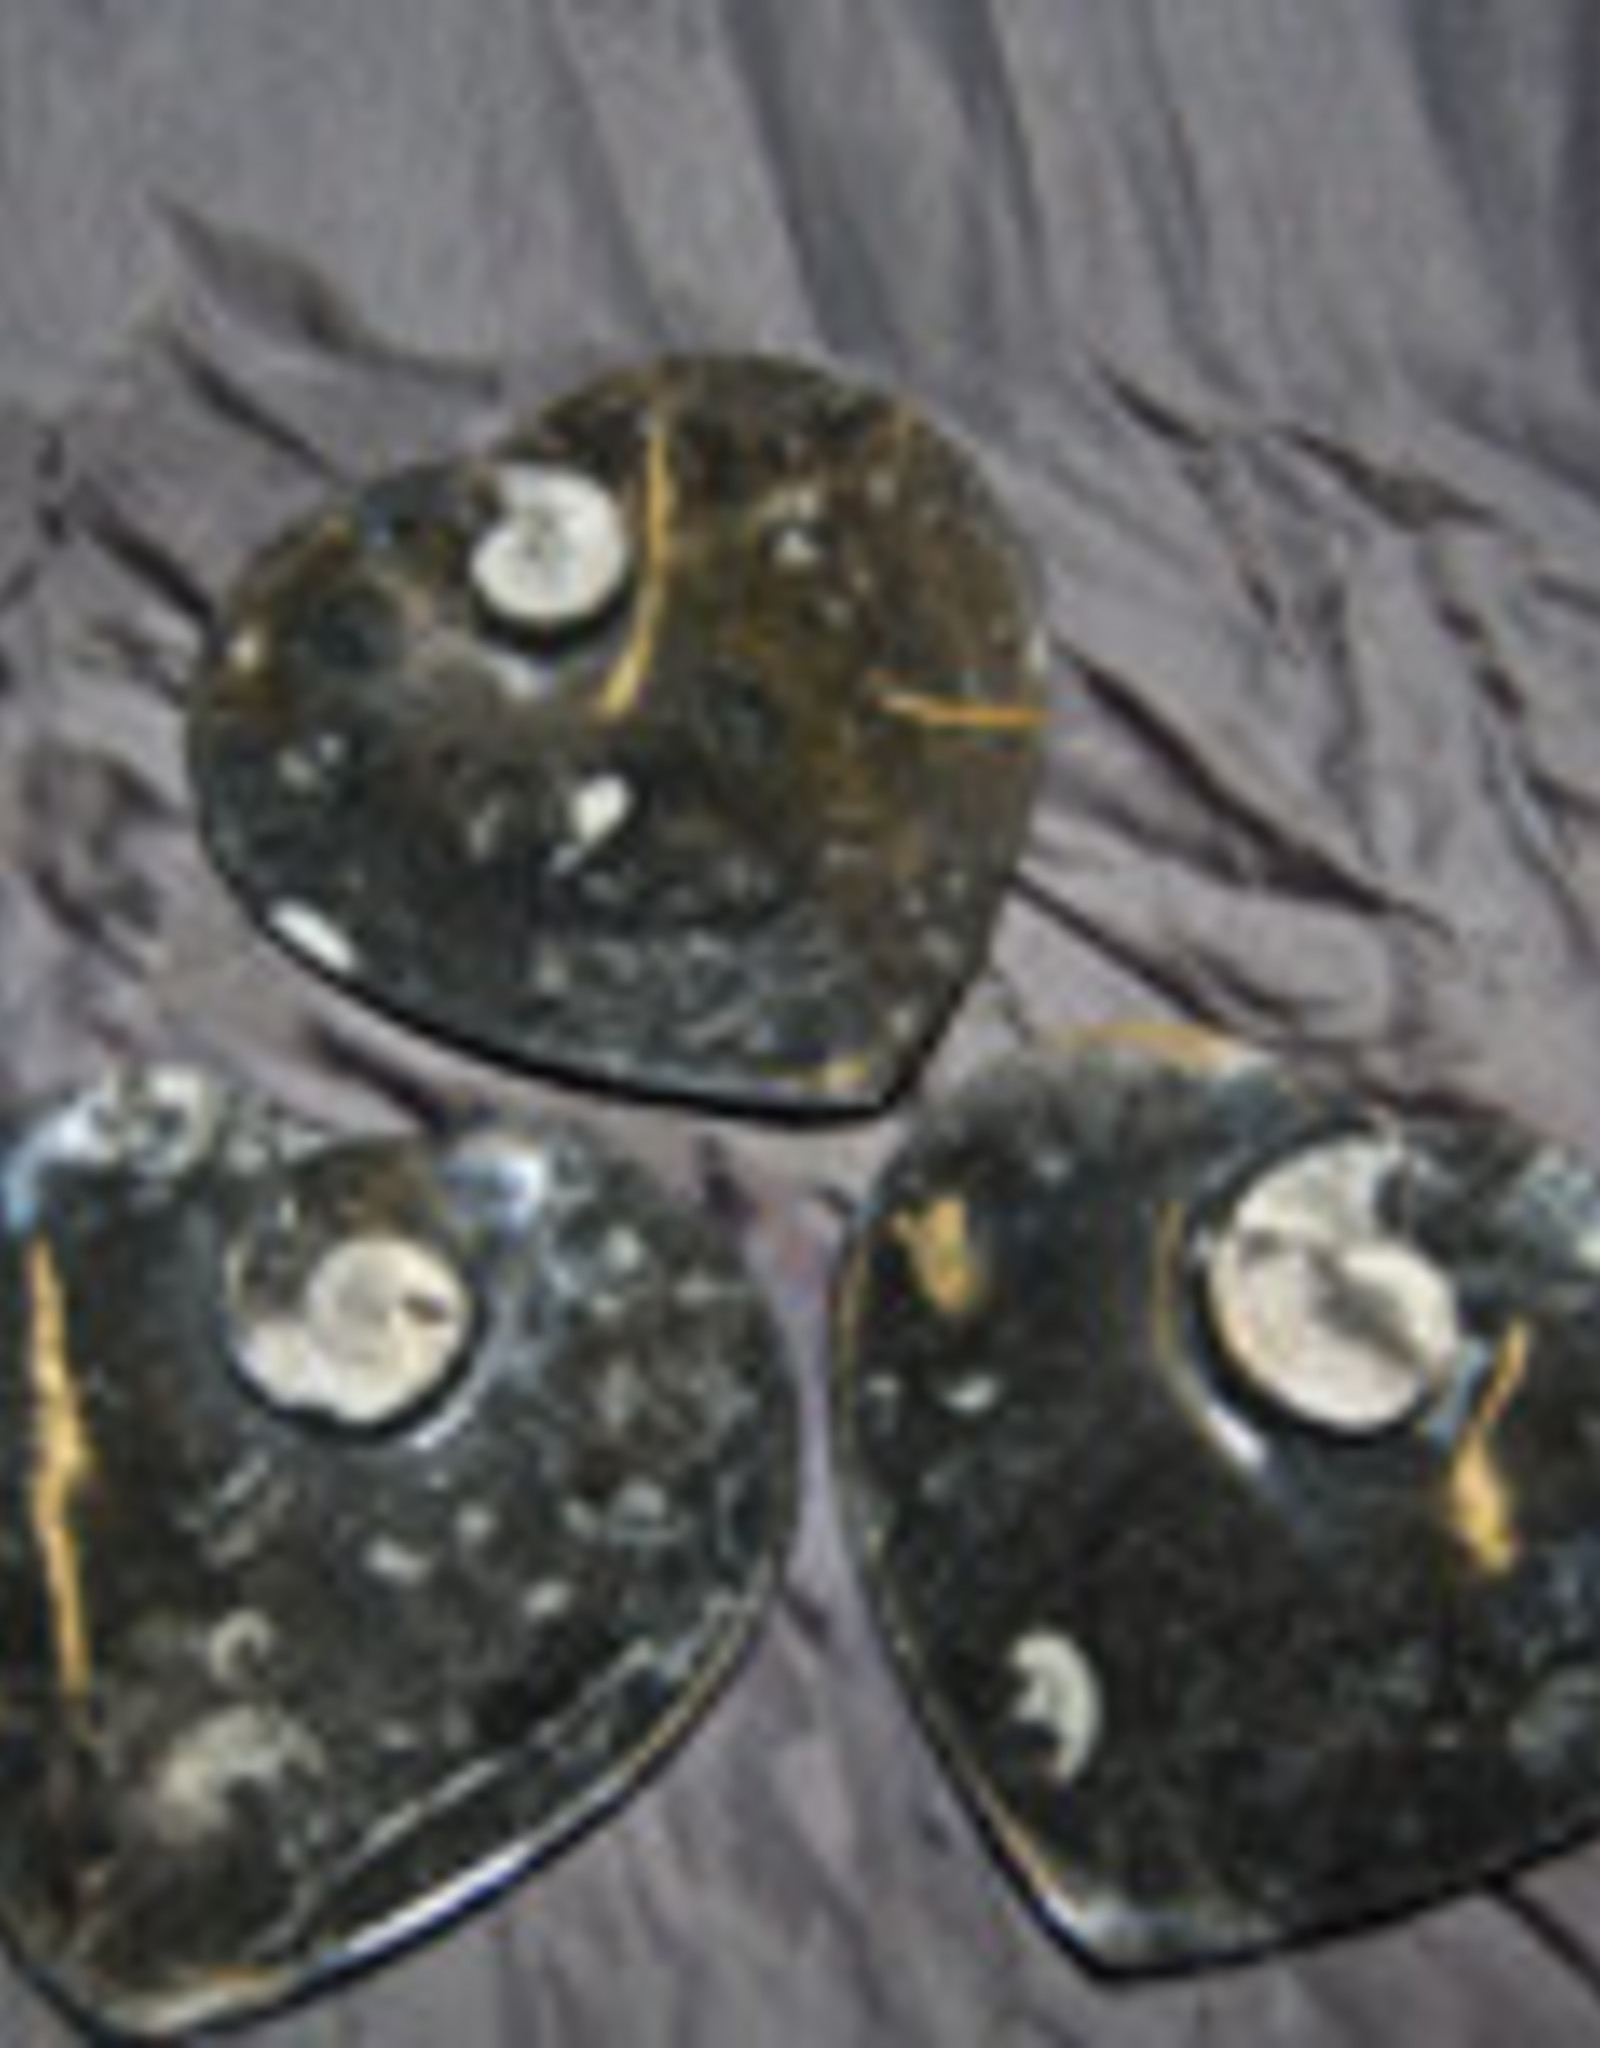 Marine Fossil - Ammonite Dish - Heart